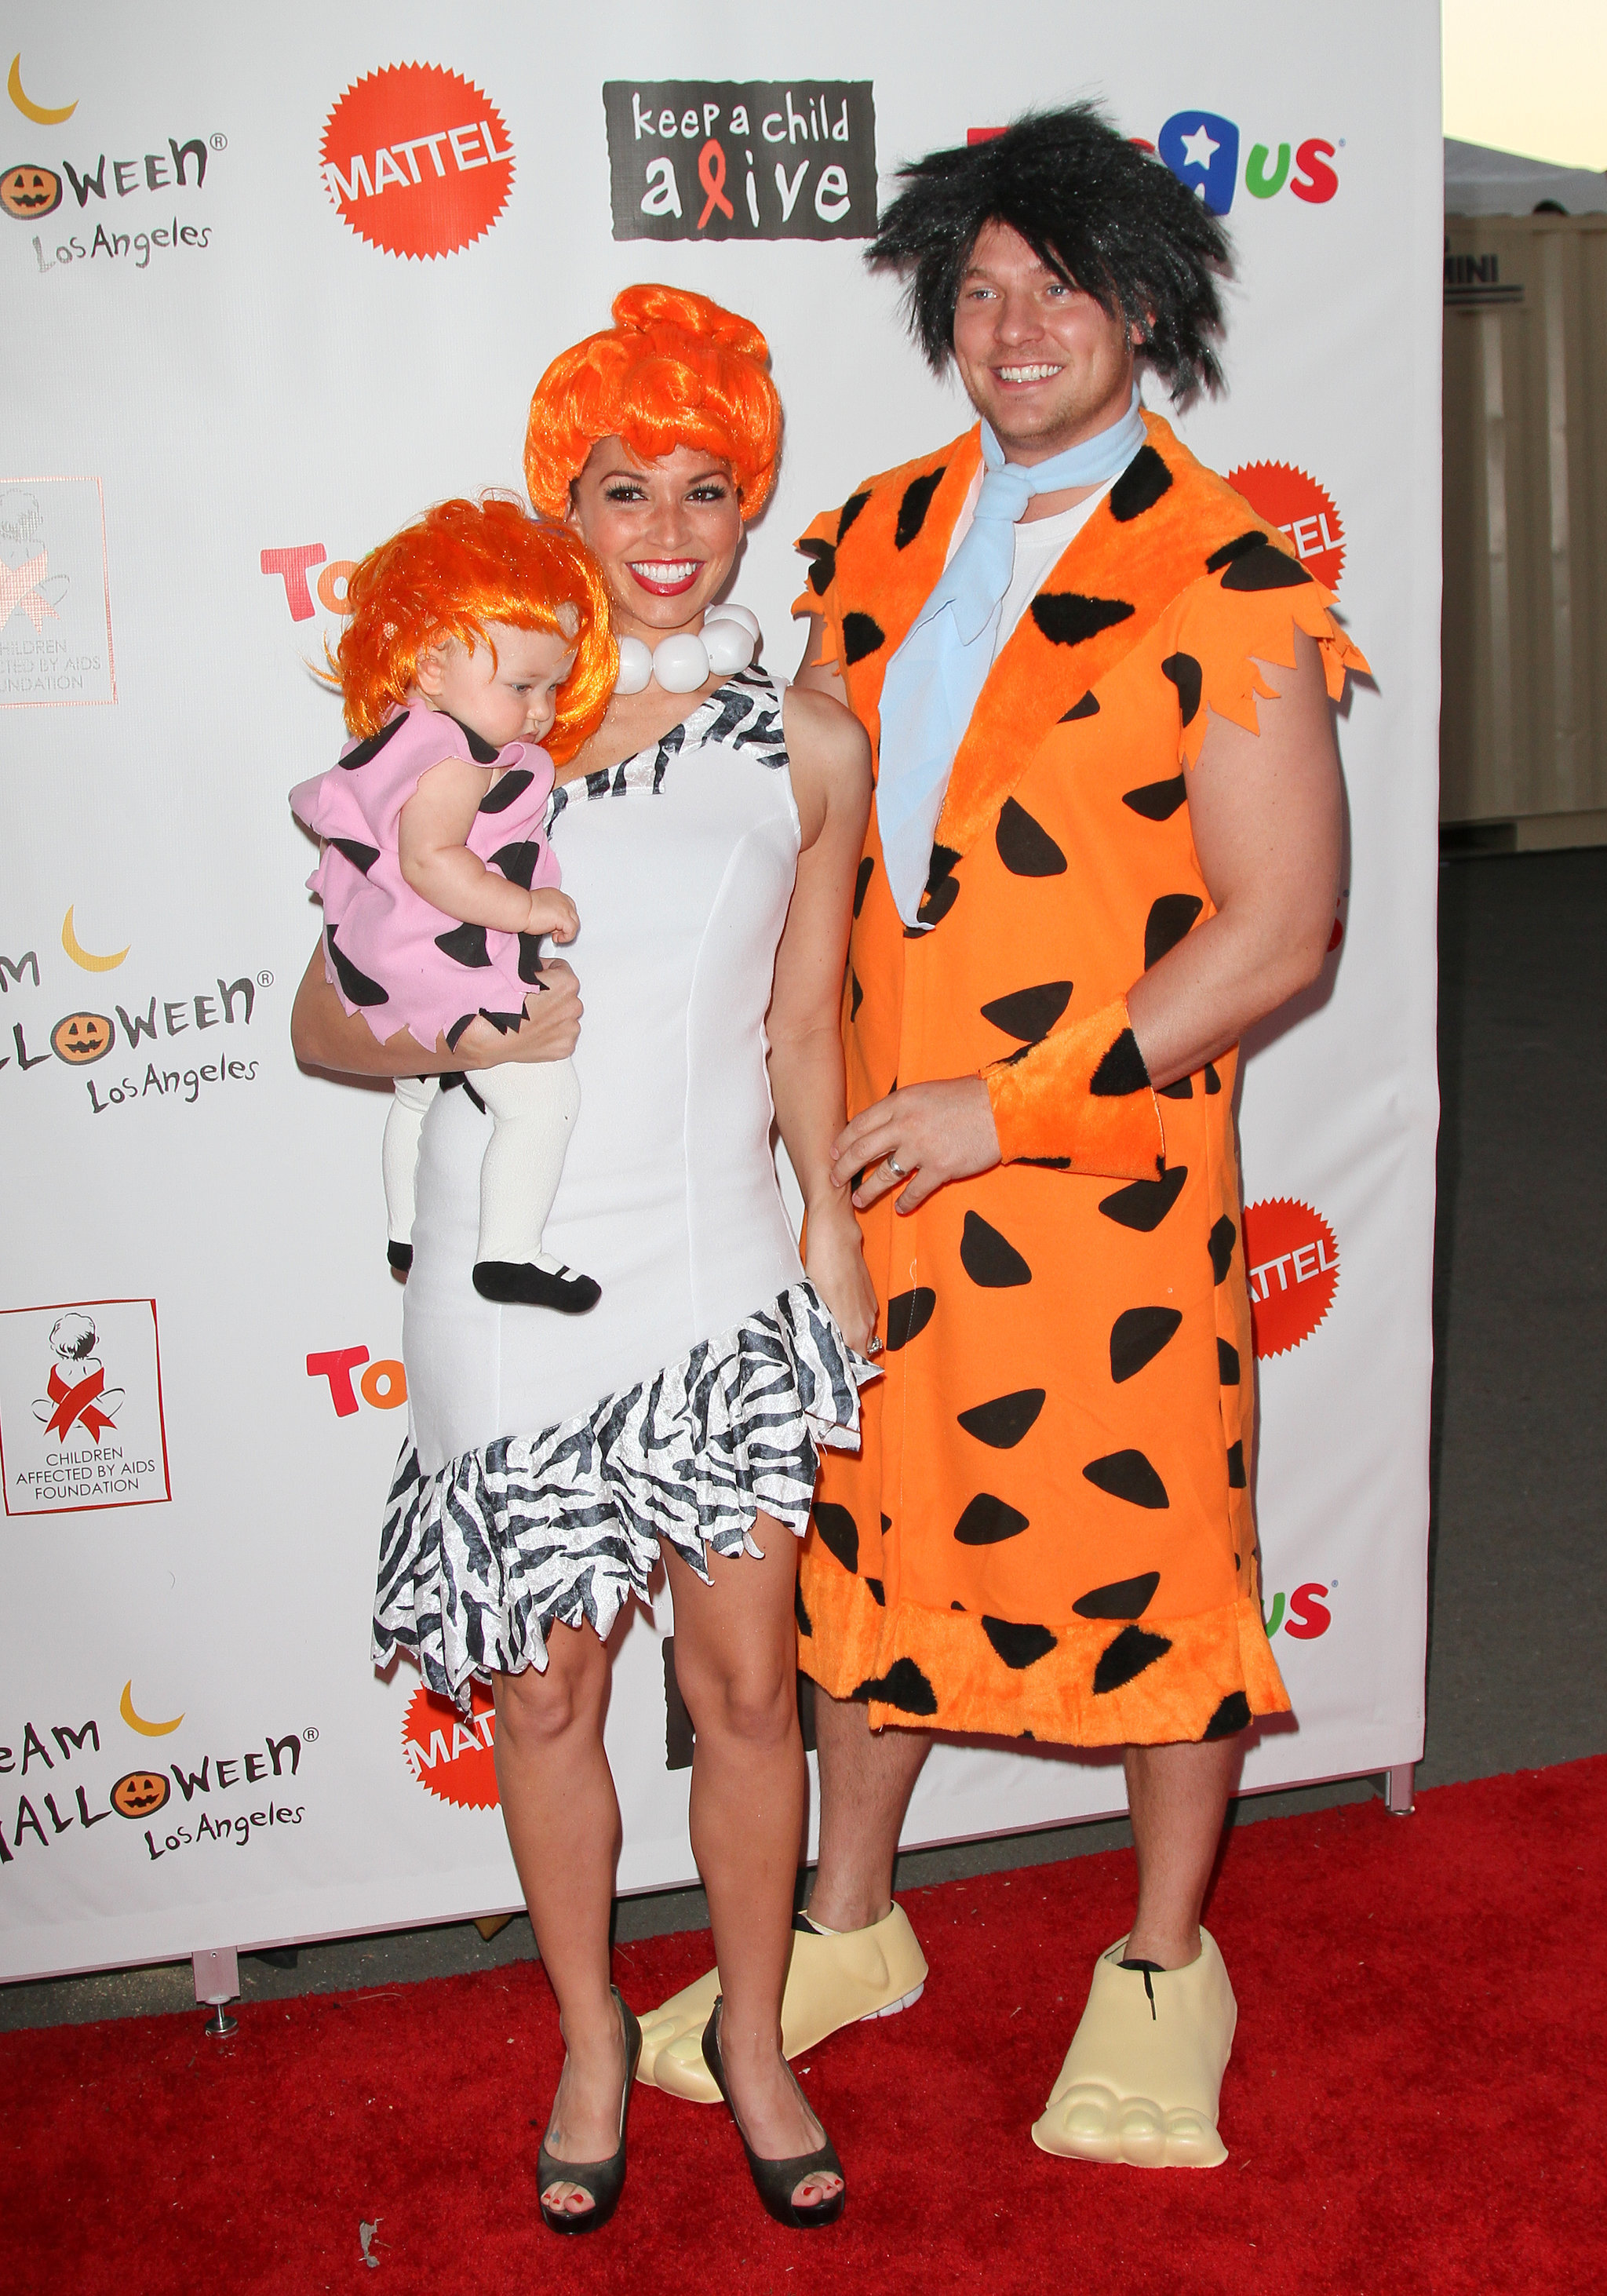 Melissa Rycroft and Tye Strickland as Flintstones Characters